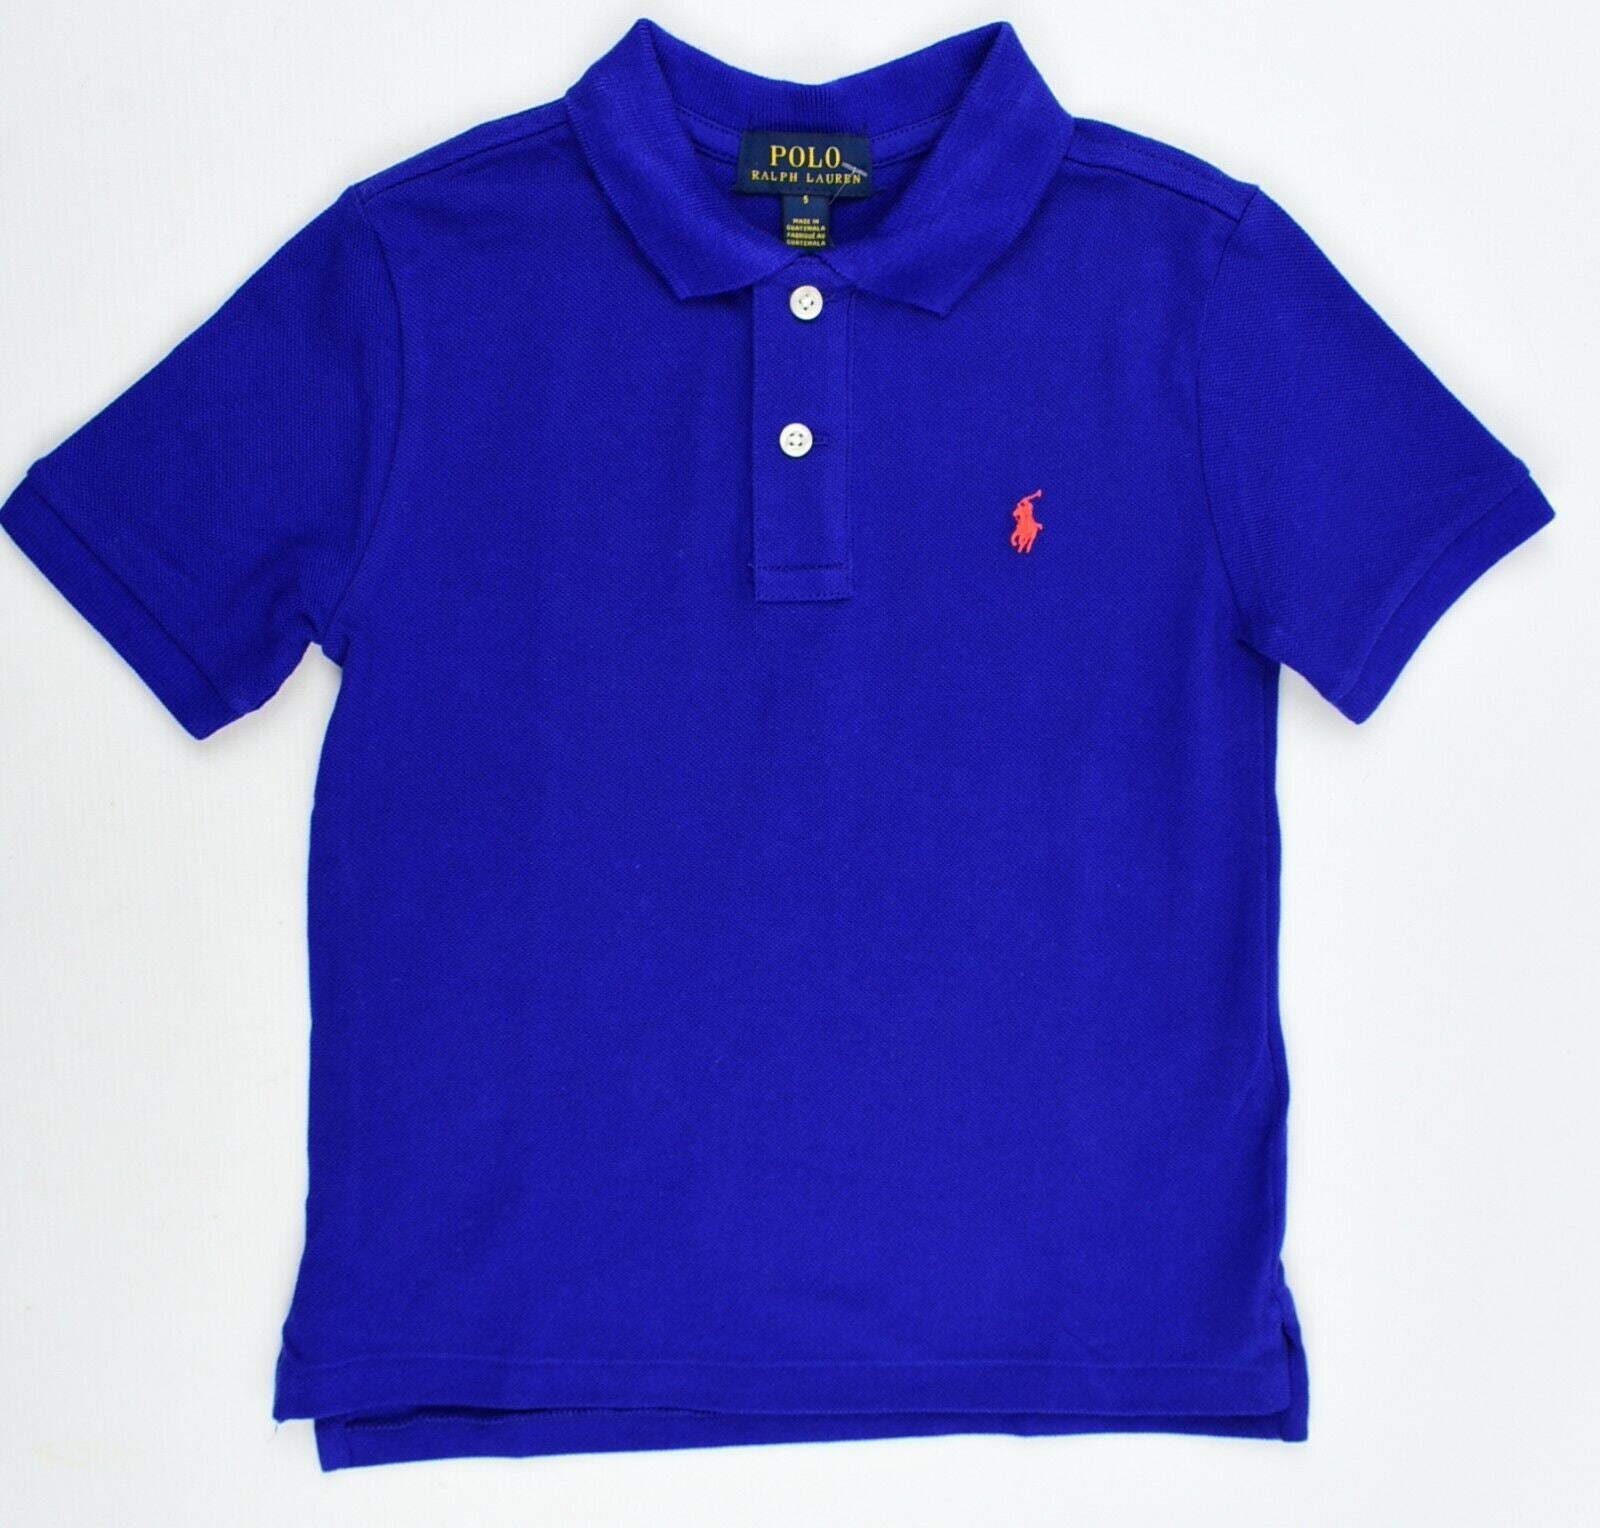 POLO RALPH LAUREN Boys' Kids' Polo Shirt, Royal Blue - size 5 years